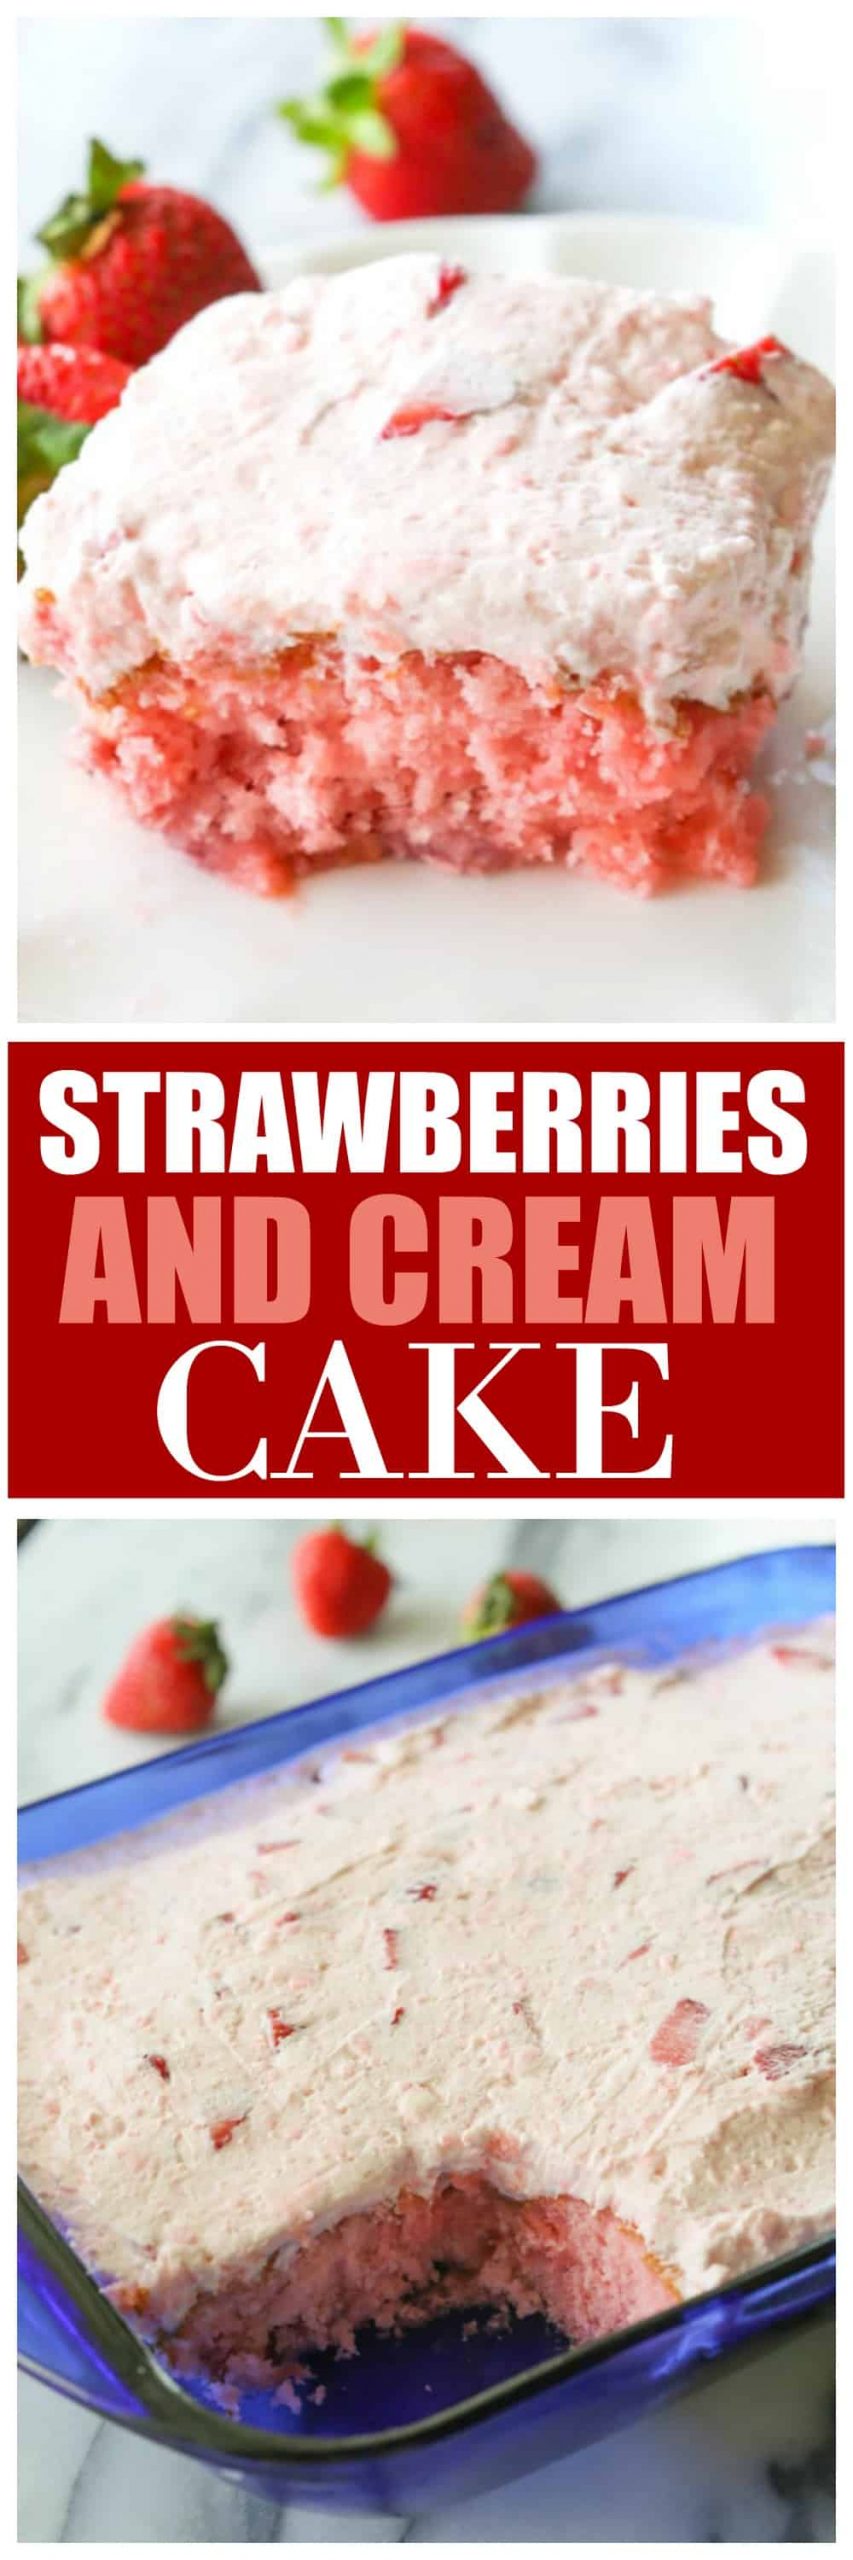 fb image scaled - Strawberries and Cream Cake